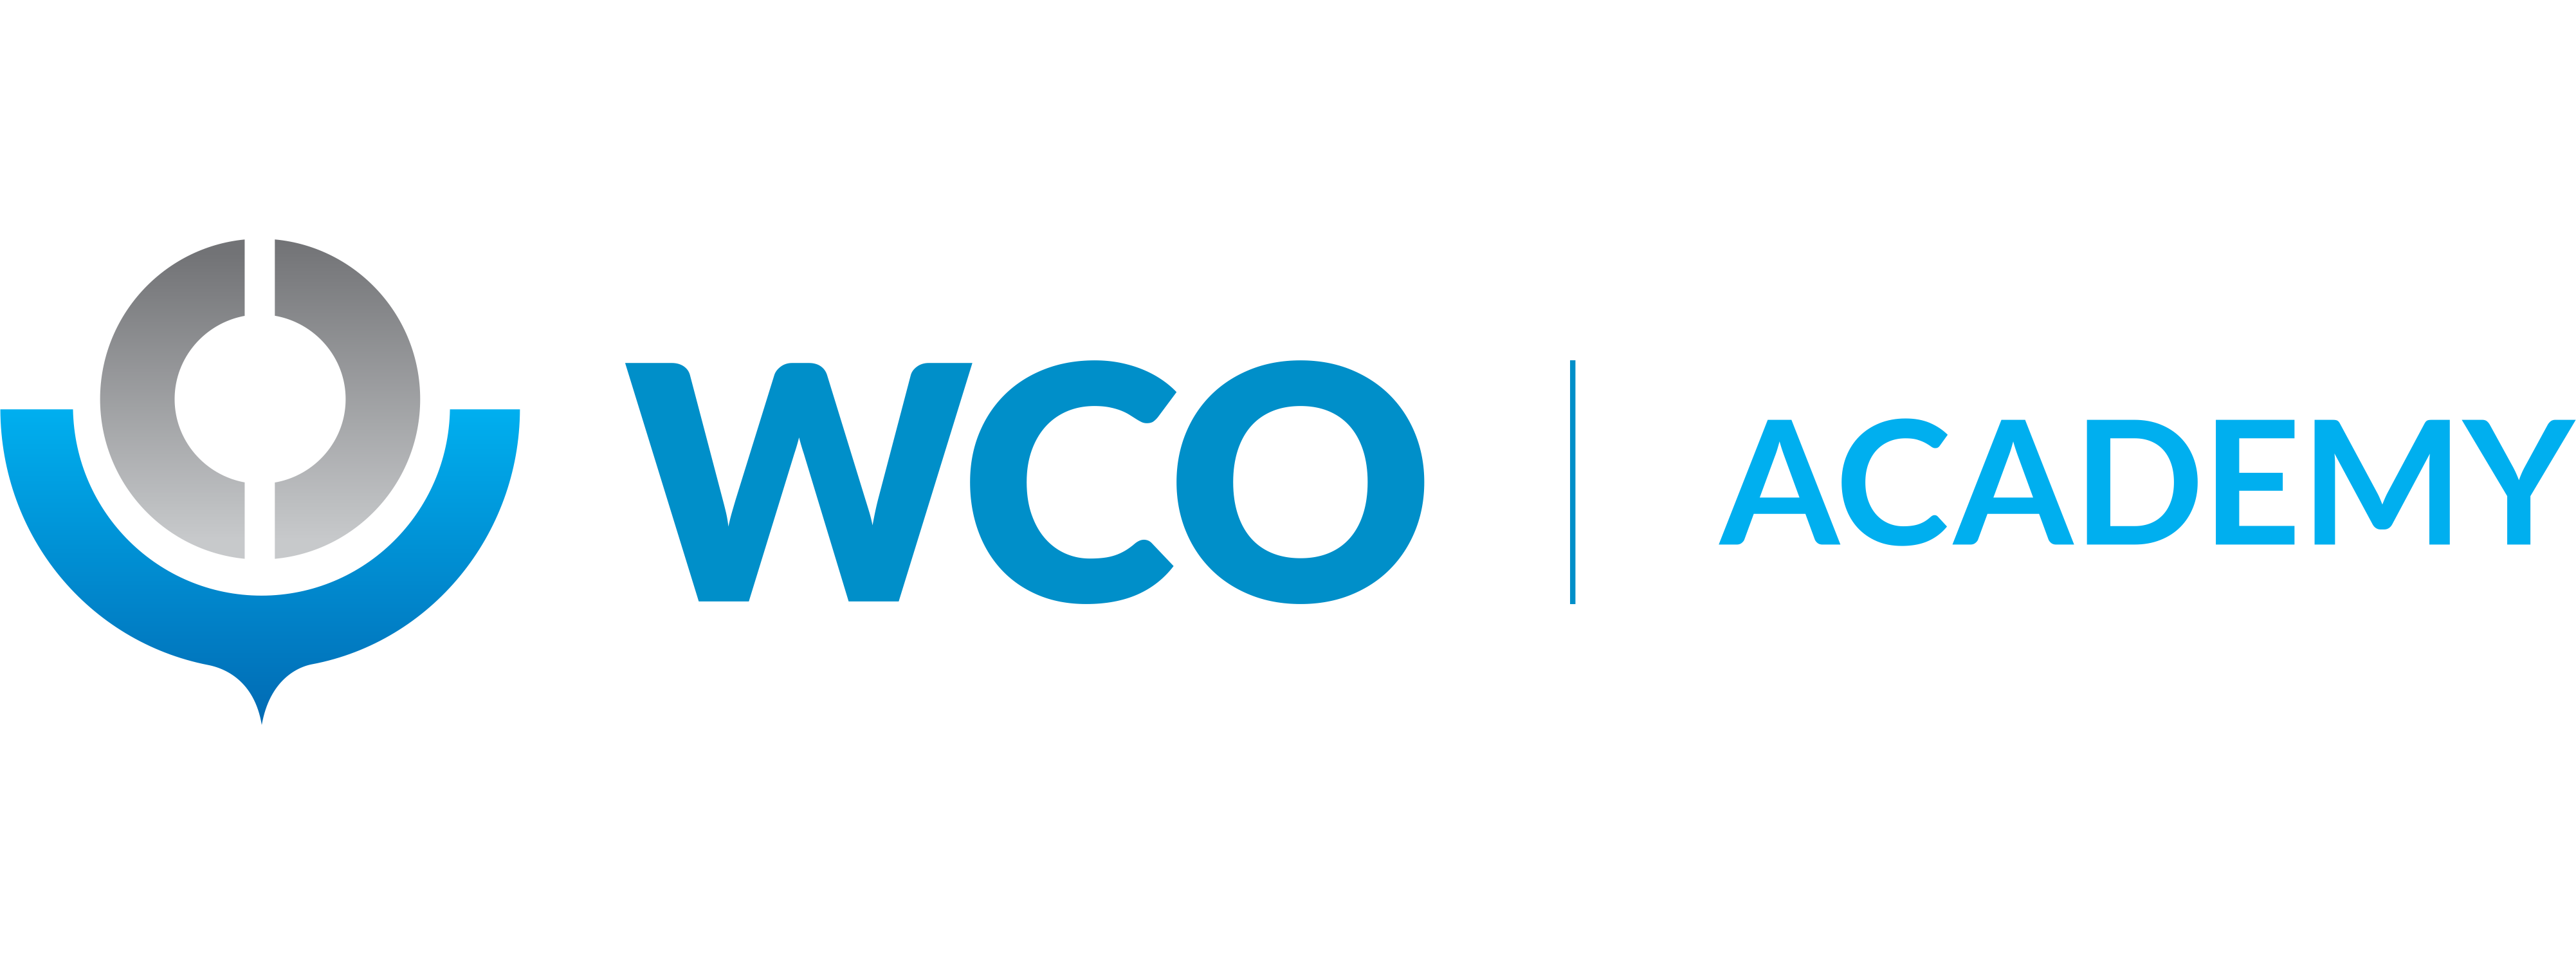 WCO Data Model 2